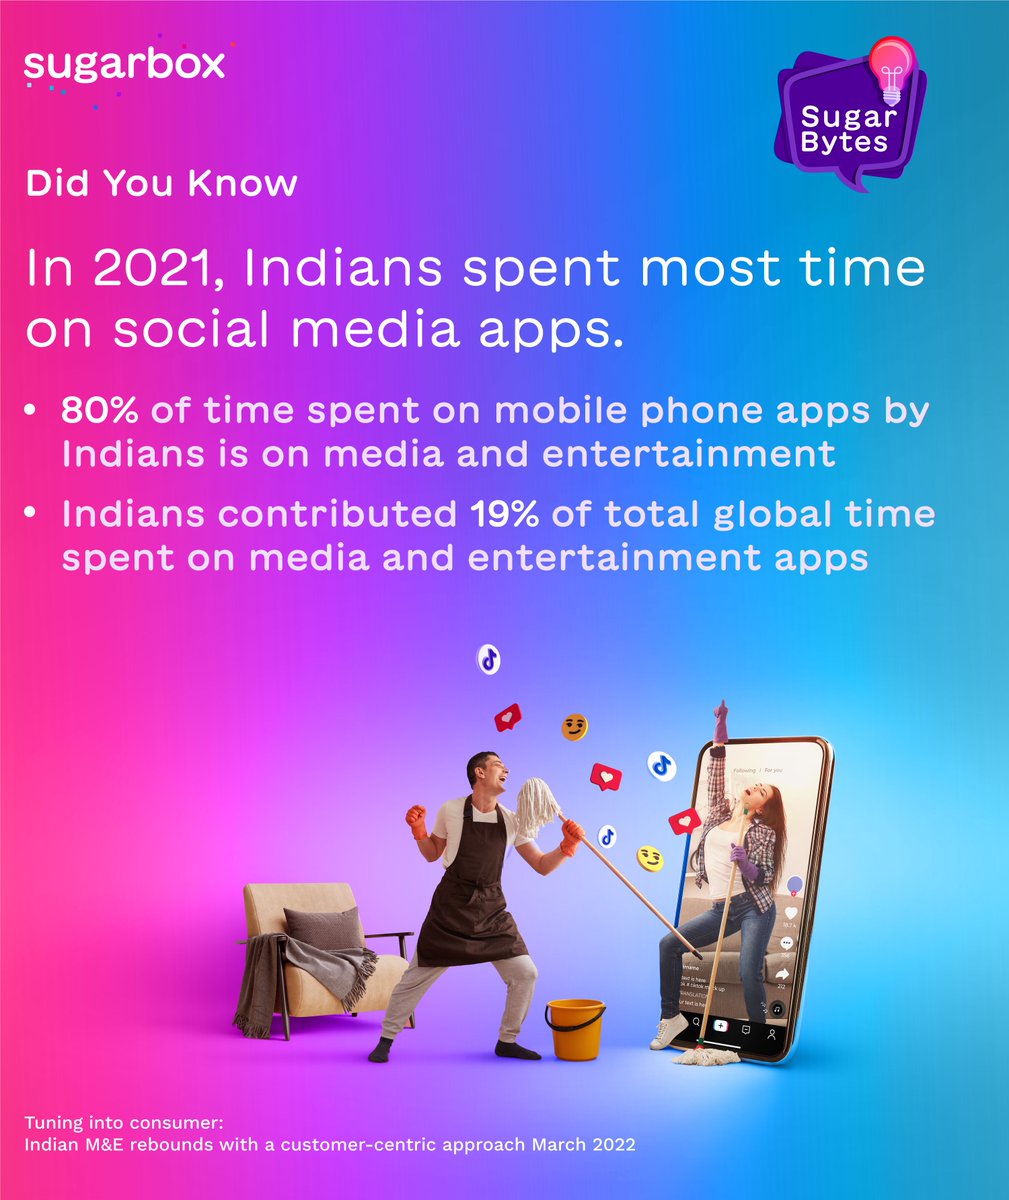 #DidYouKnow 
.
.
.
.
.
#internet
#Content
#India
#DataConsumption
#SocialMedia